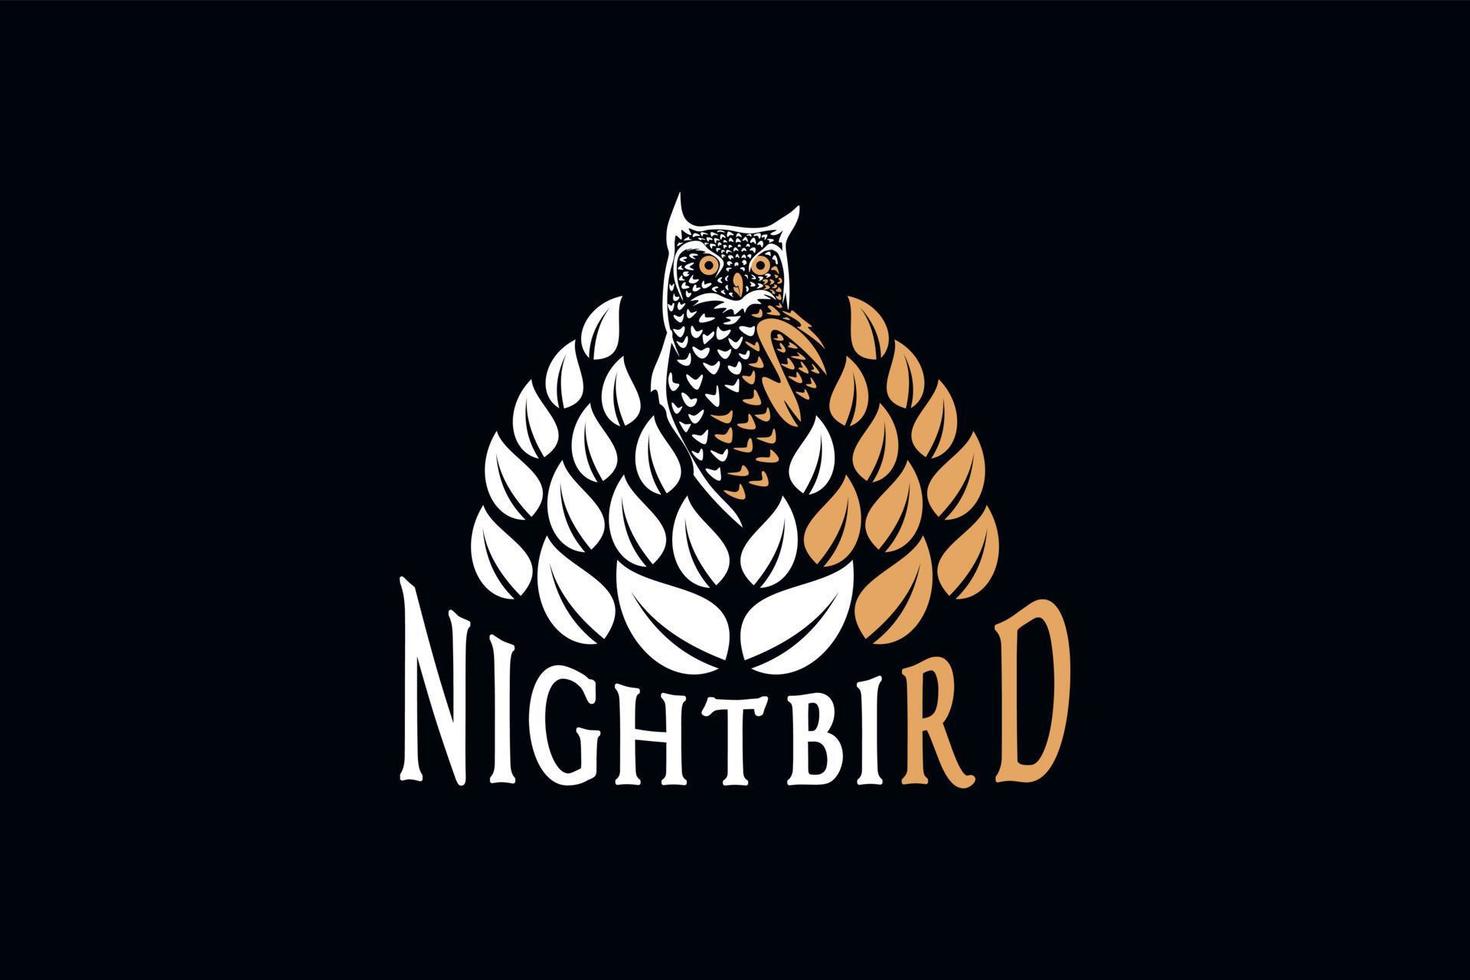 Owl or night bird logo design with creative leaf concept vector